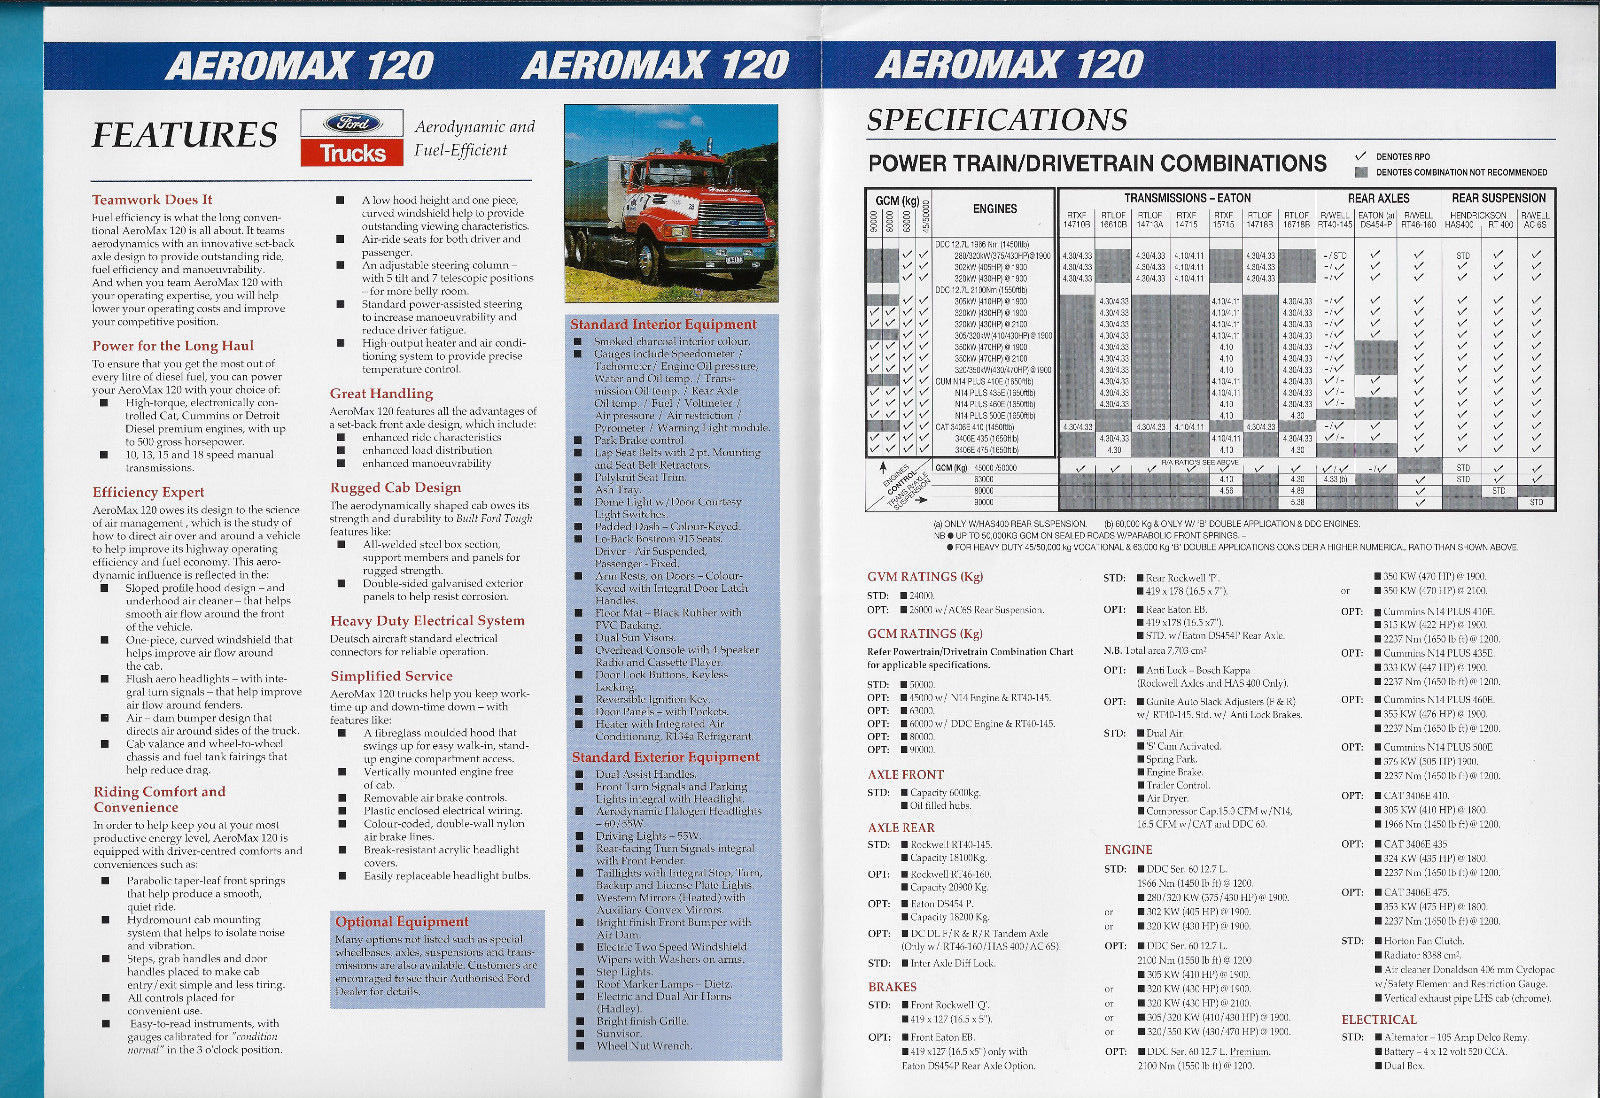 Ford Aeromax 120 (2).jpg-2022-12-7 13.59.49